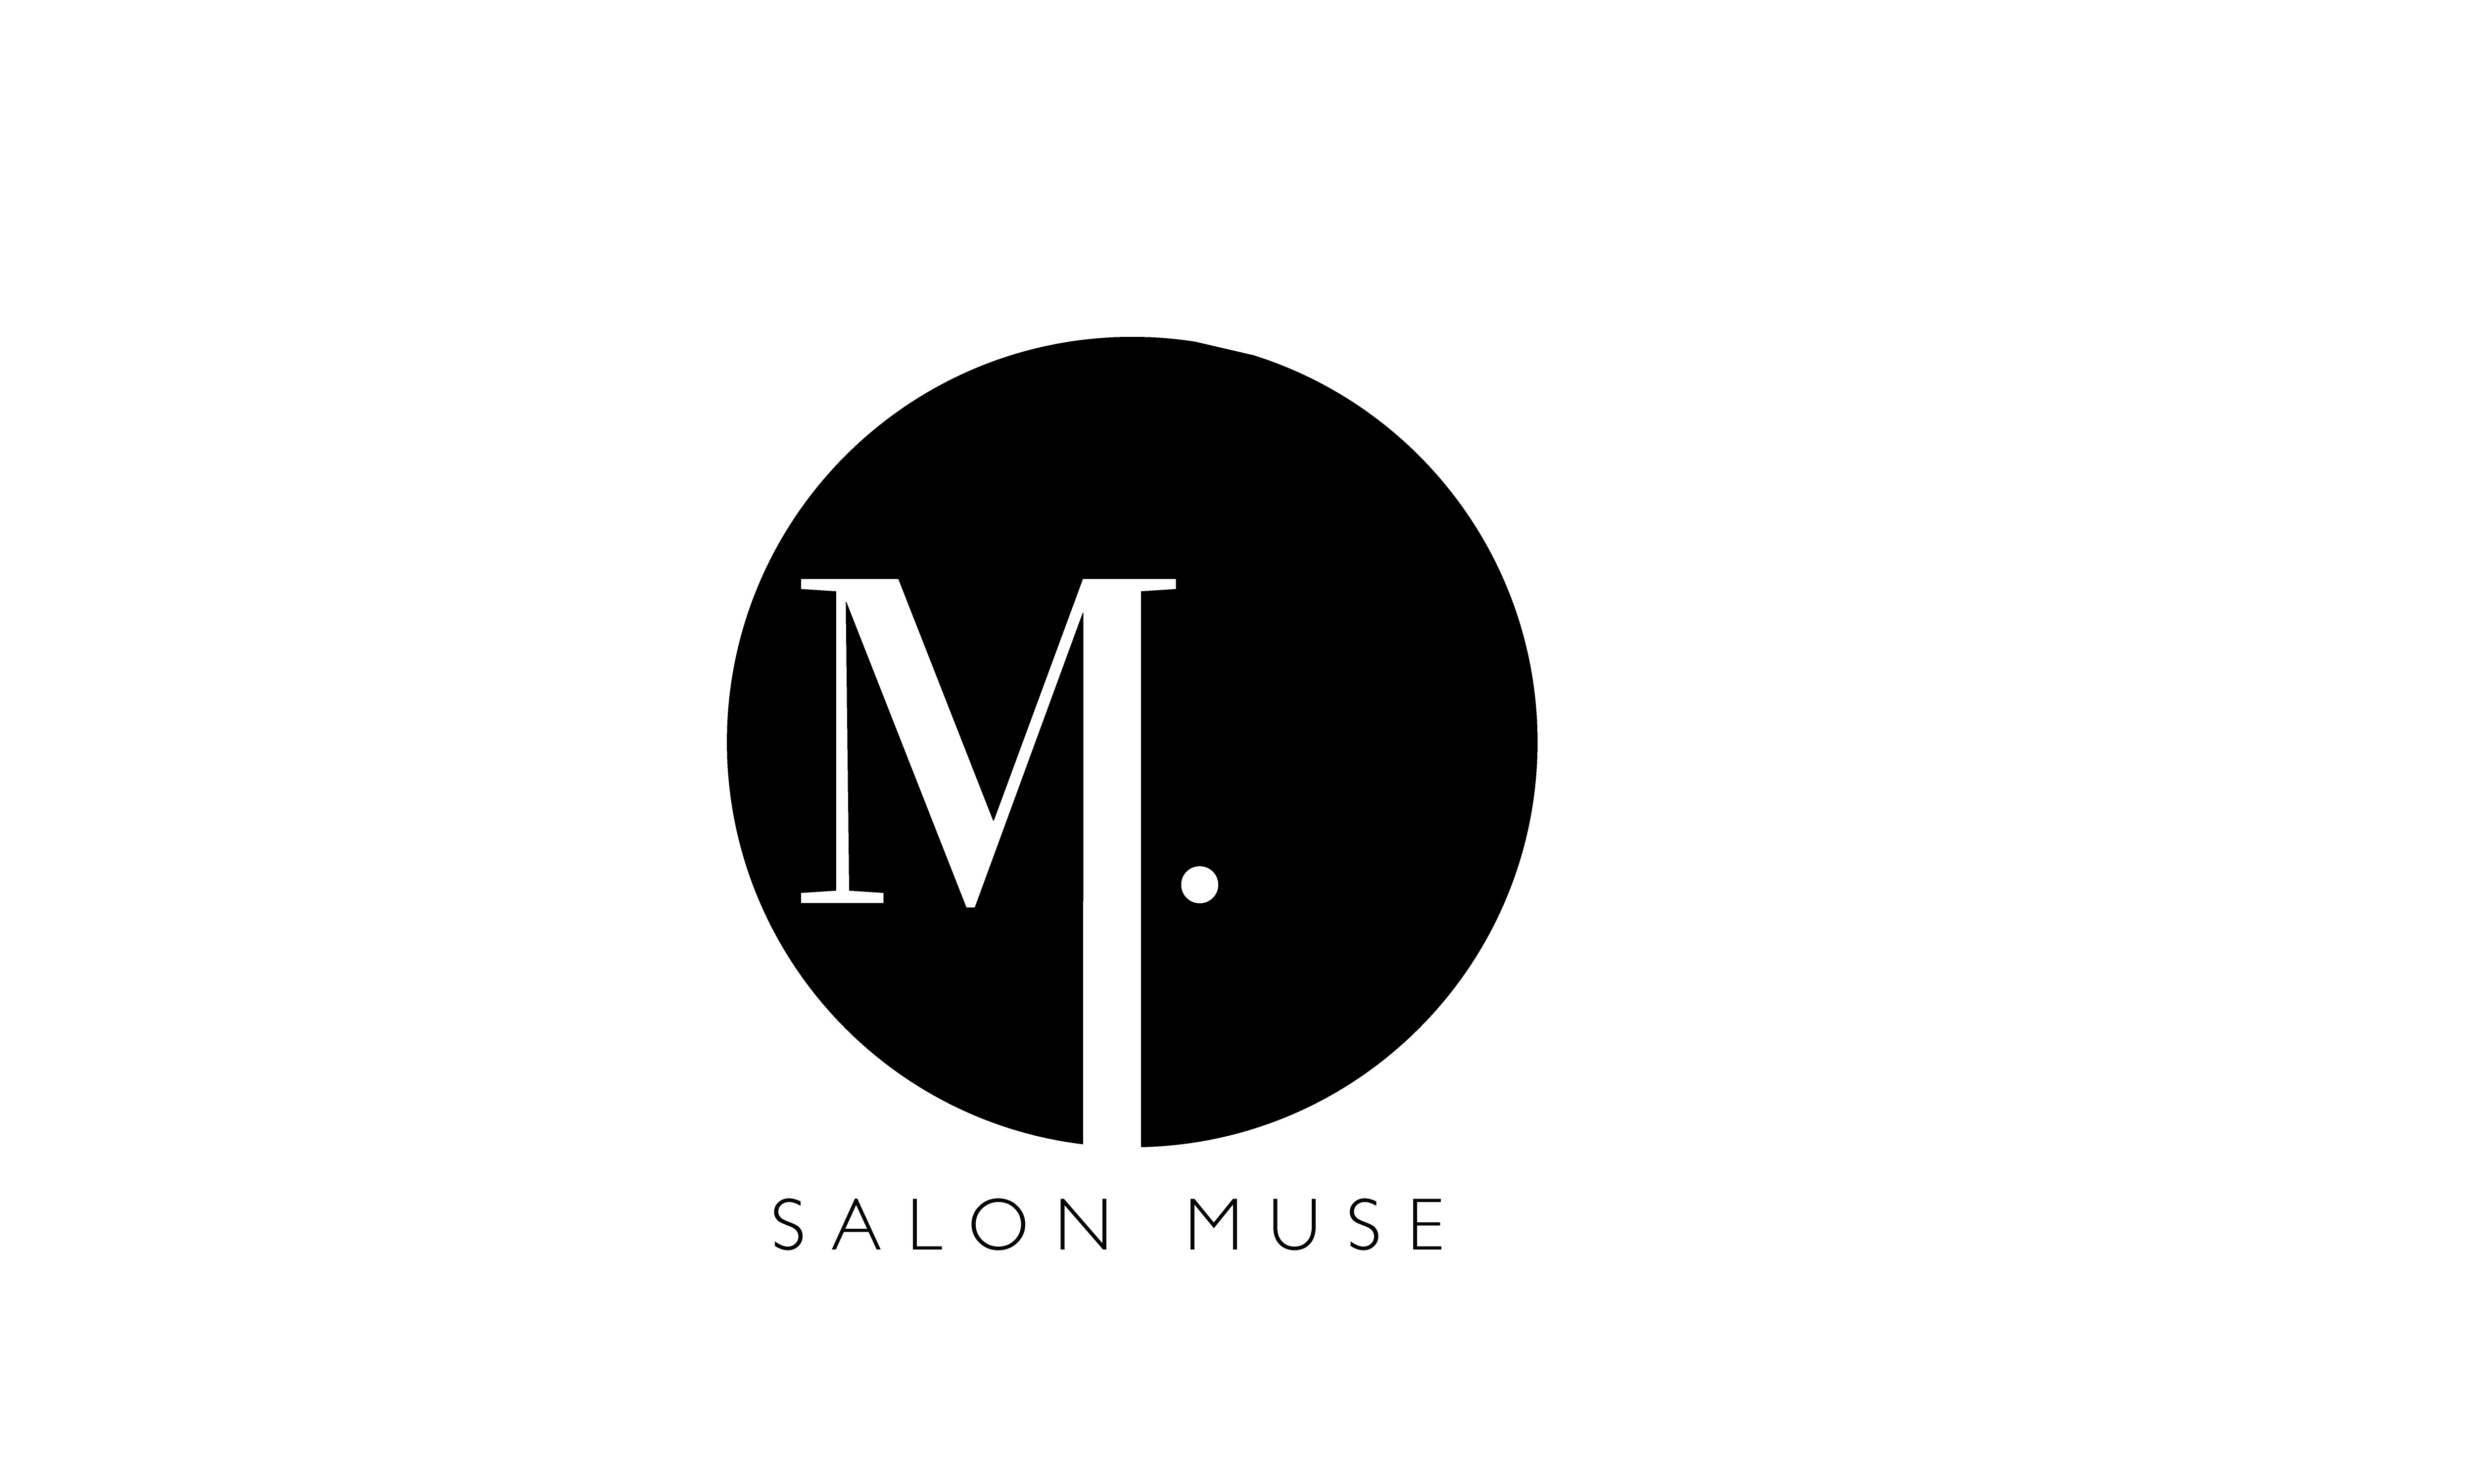 artist and muse salon